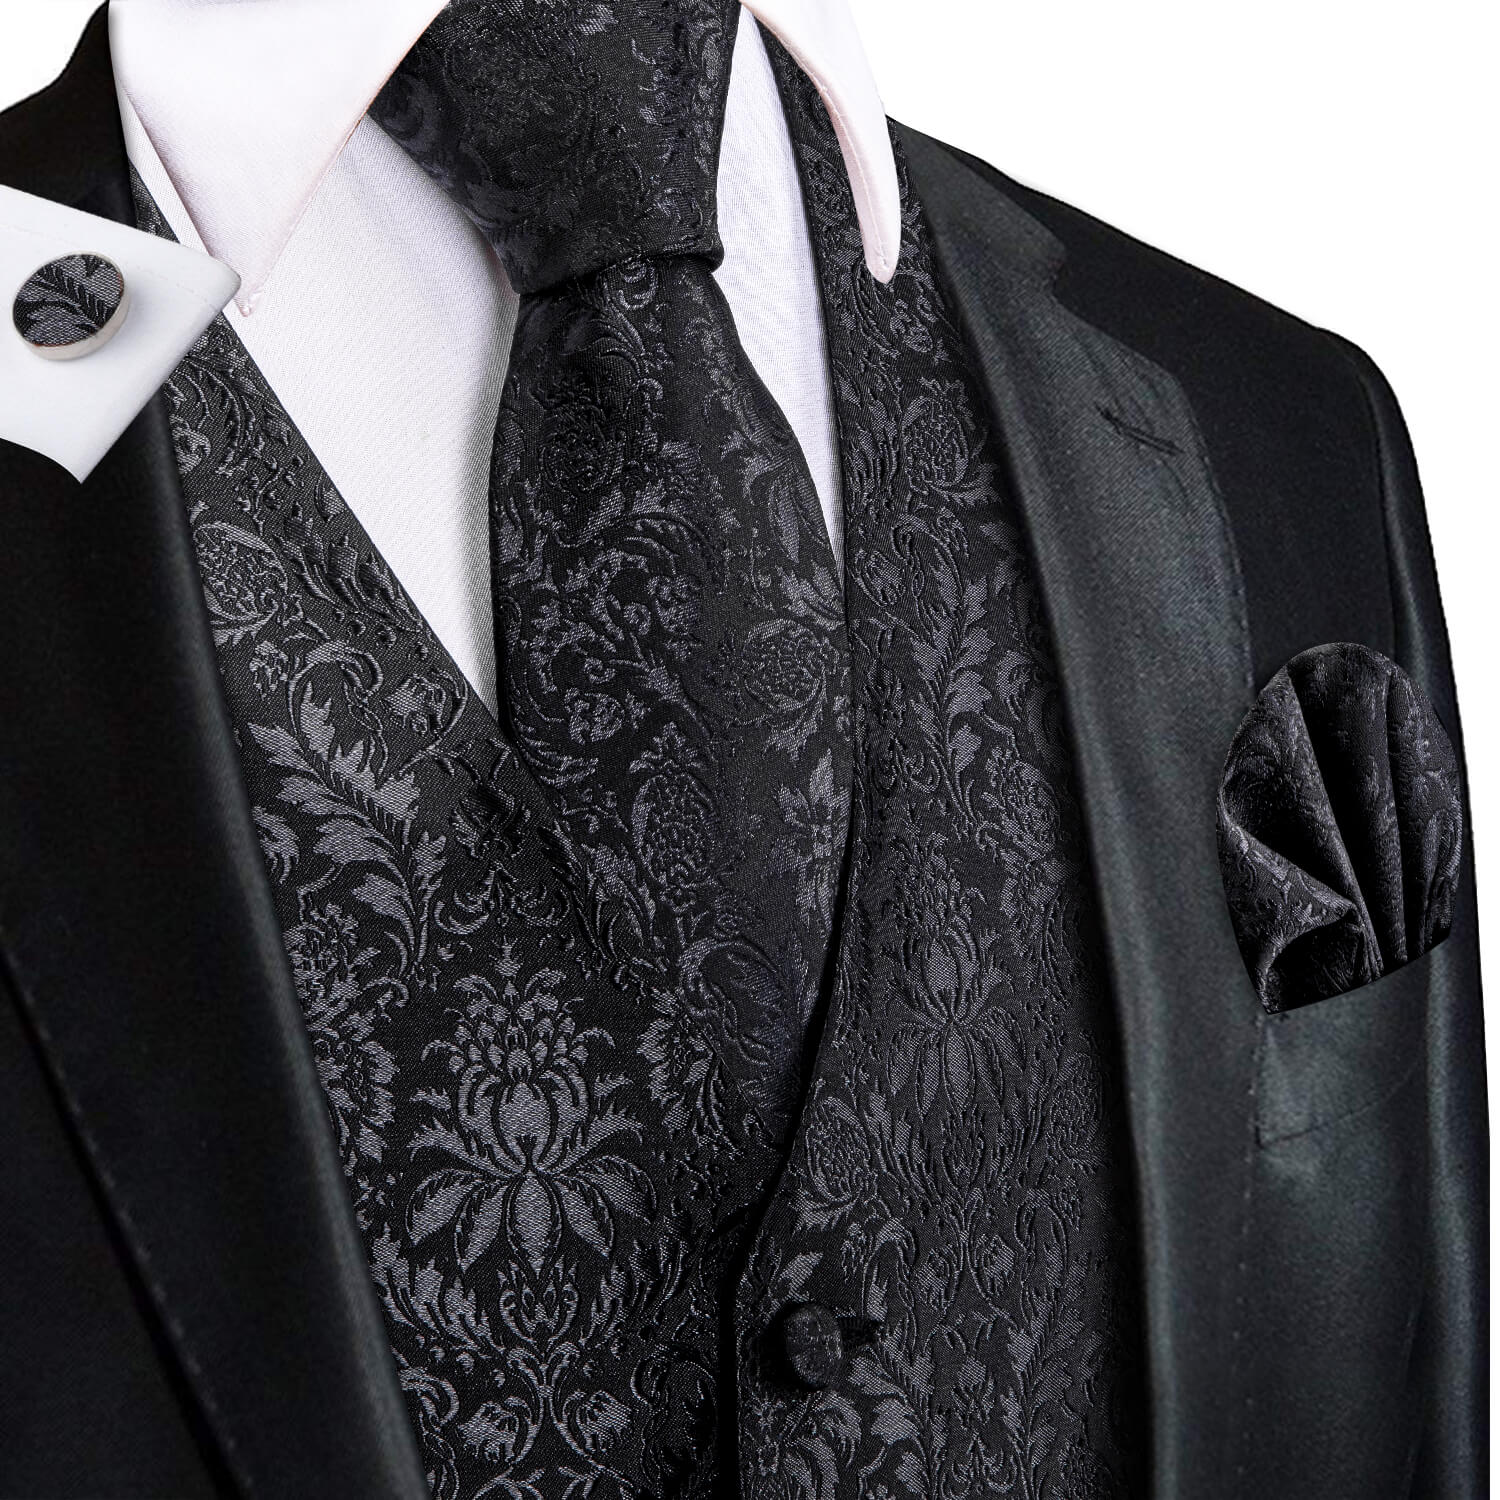 Black Jacquard Floral Mens Vest and Tie Set